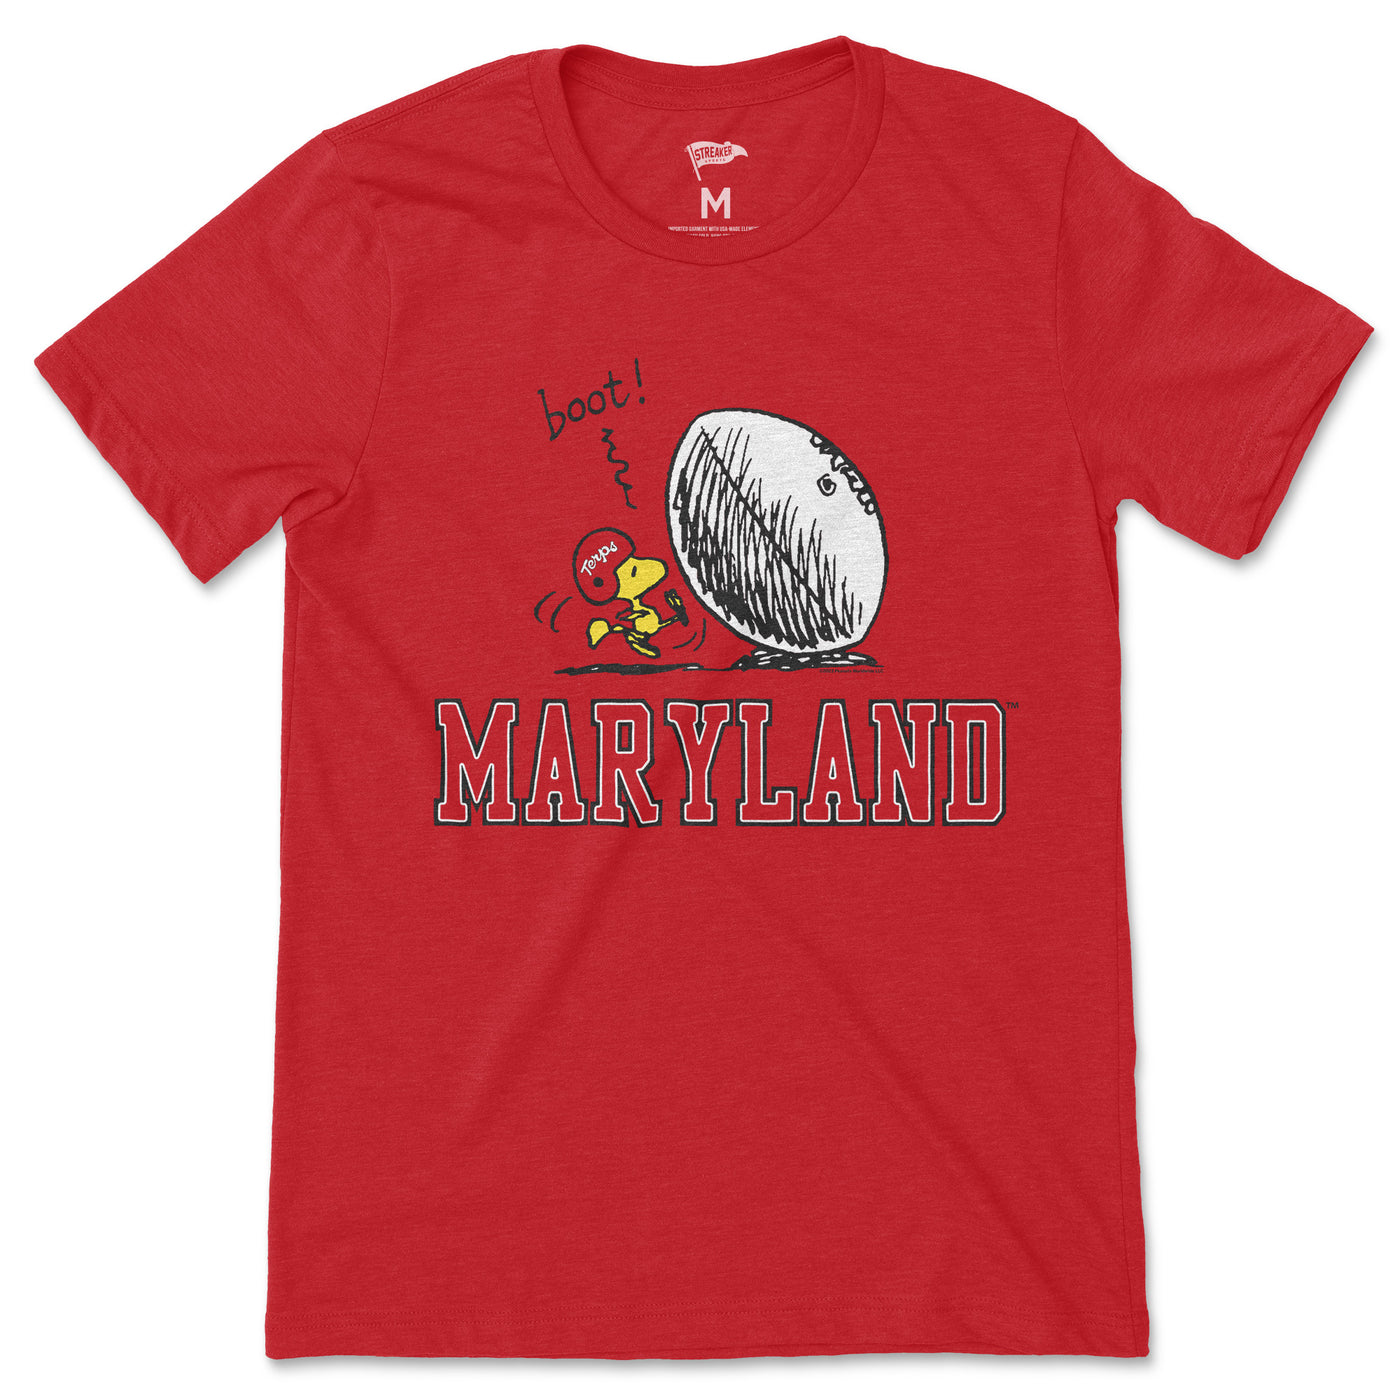 Peanuts x Maryland Woodstock Football Tee - Streaker Sports